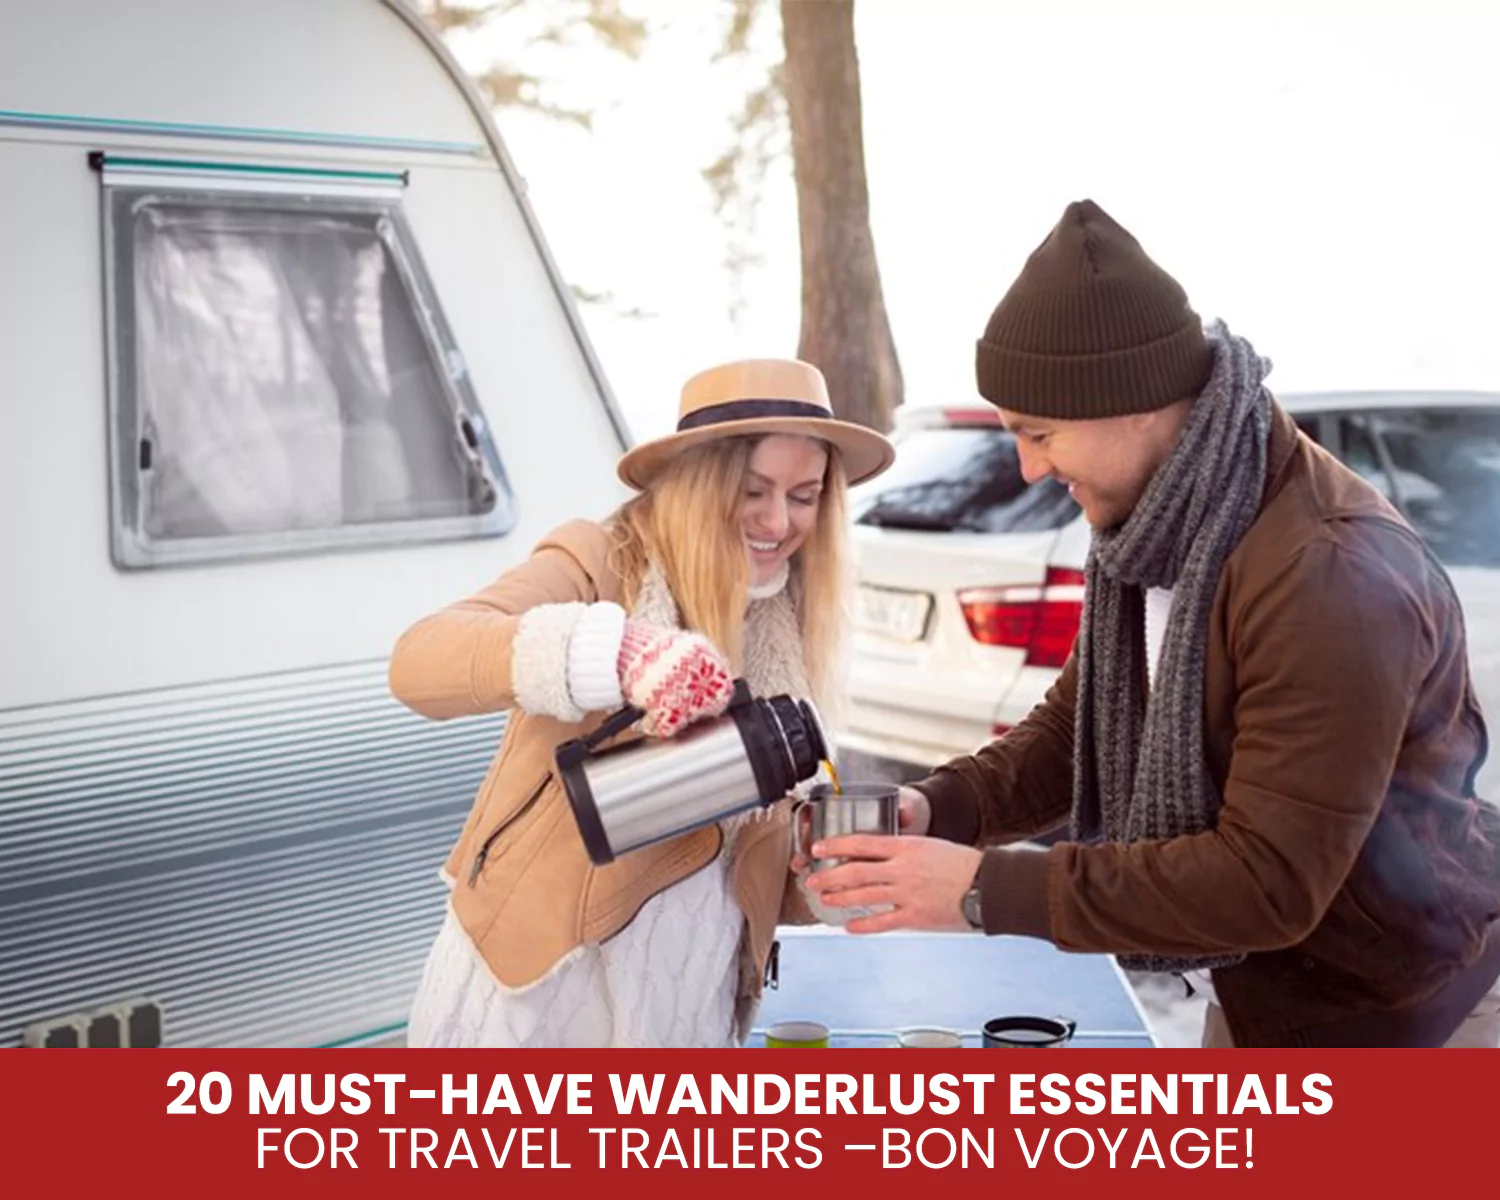 20 Must-Have Wanderlust Essentials for Travel Trailers –Bon Voyage!